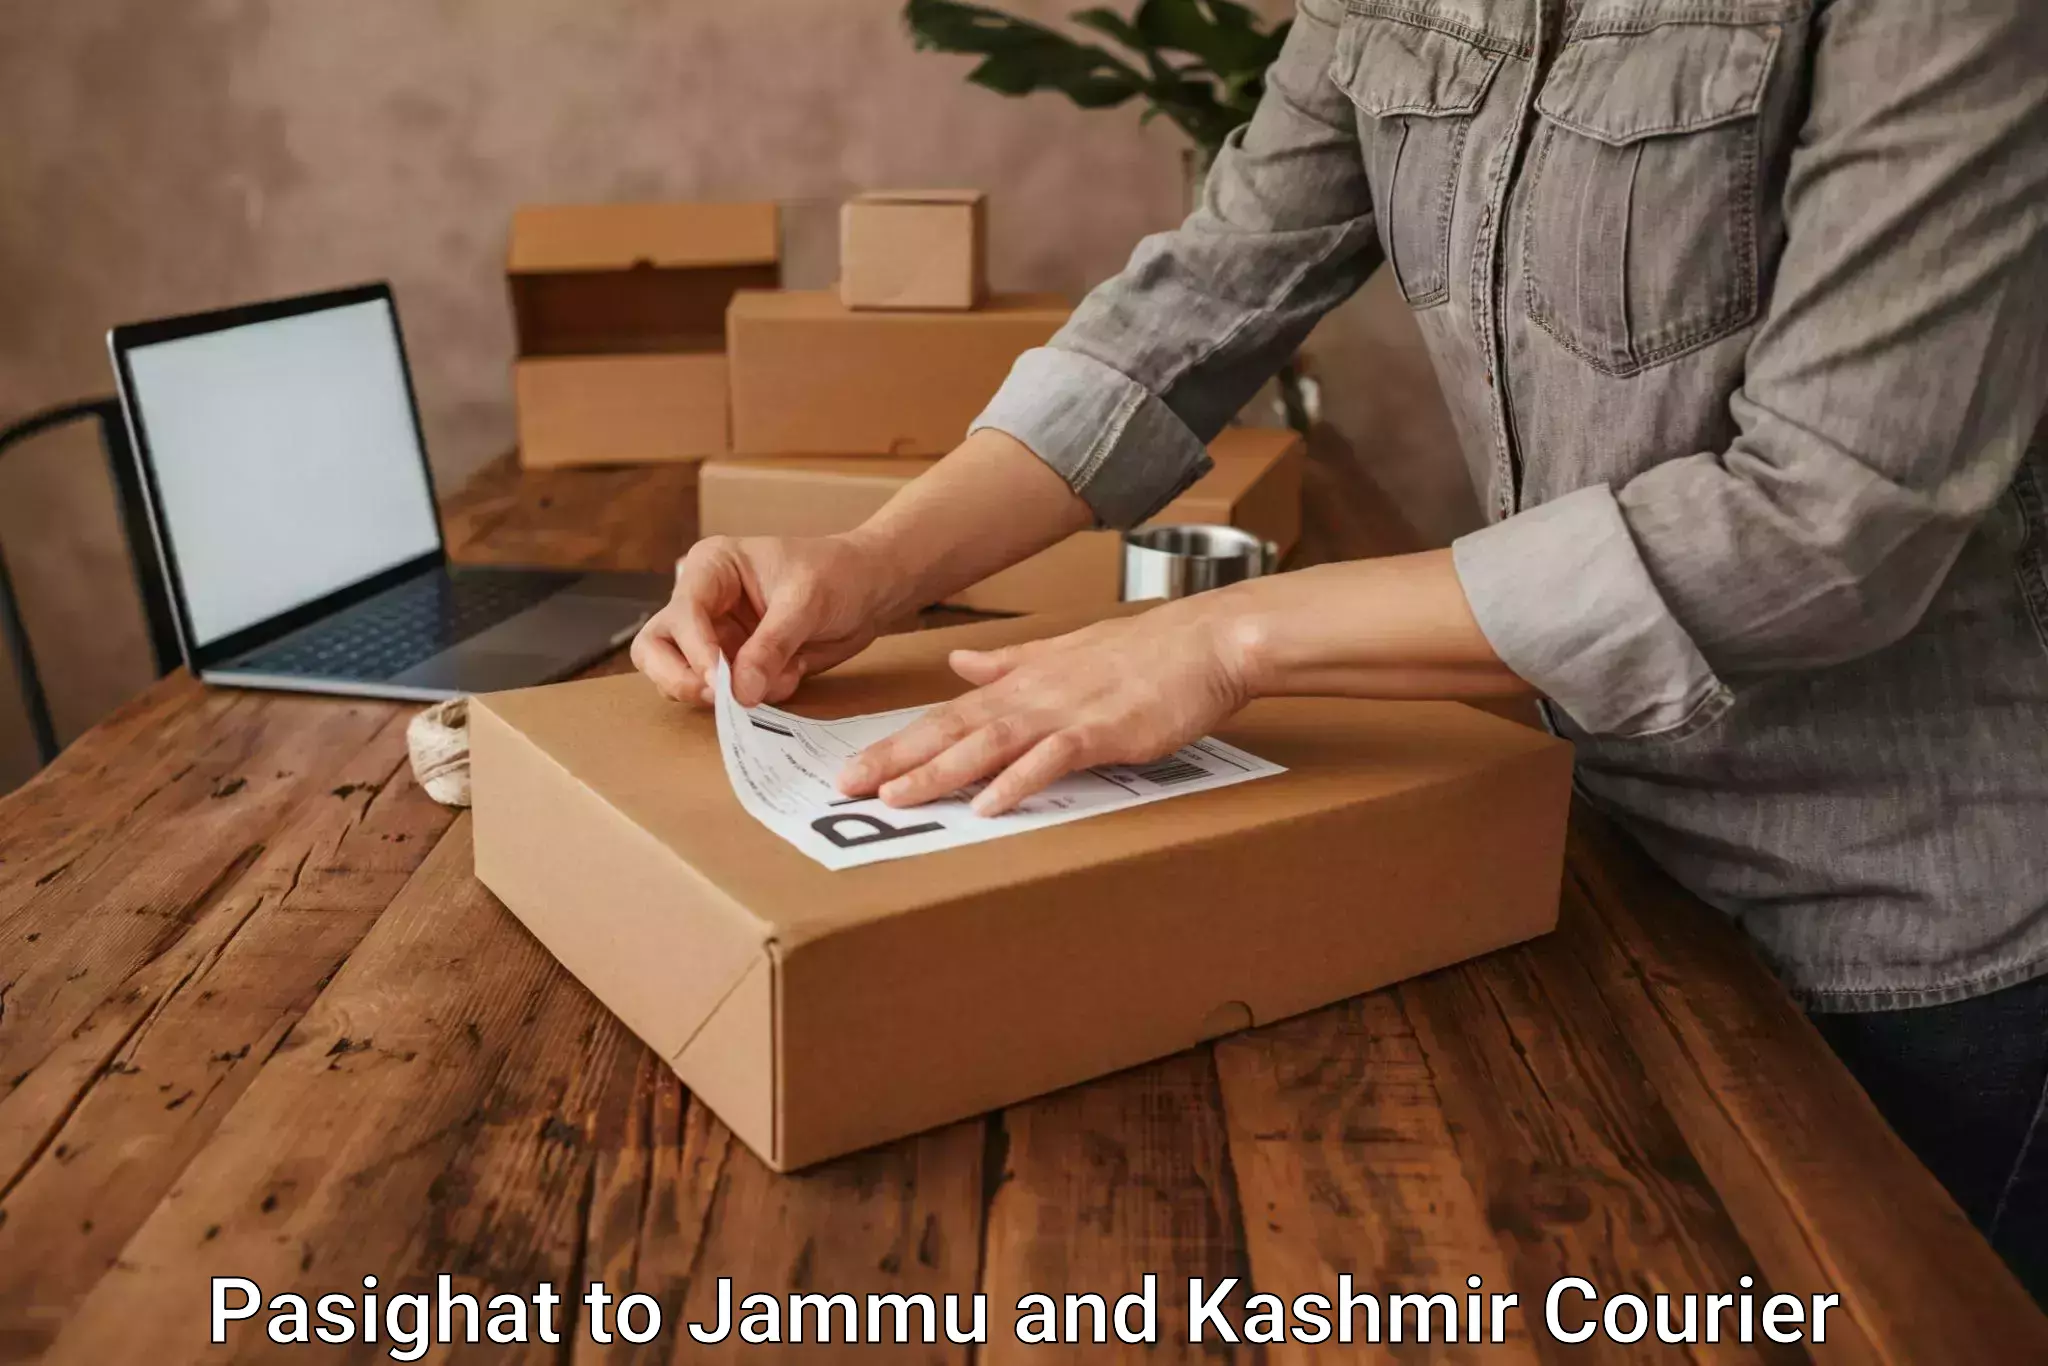 Courier service partnerships Pasighat to Srinagar Kashmir